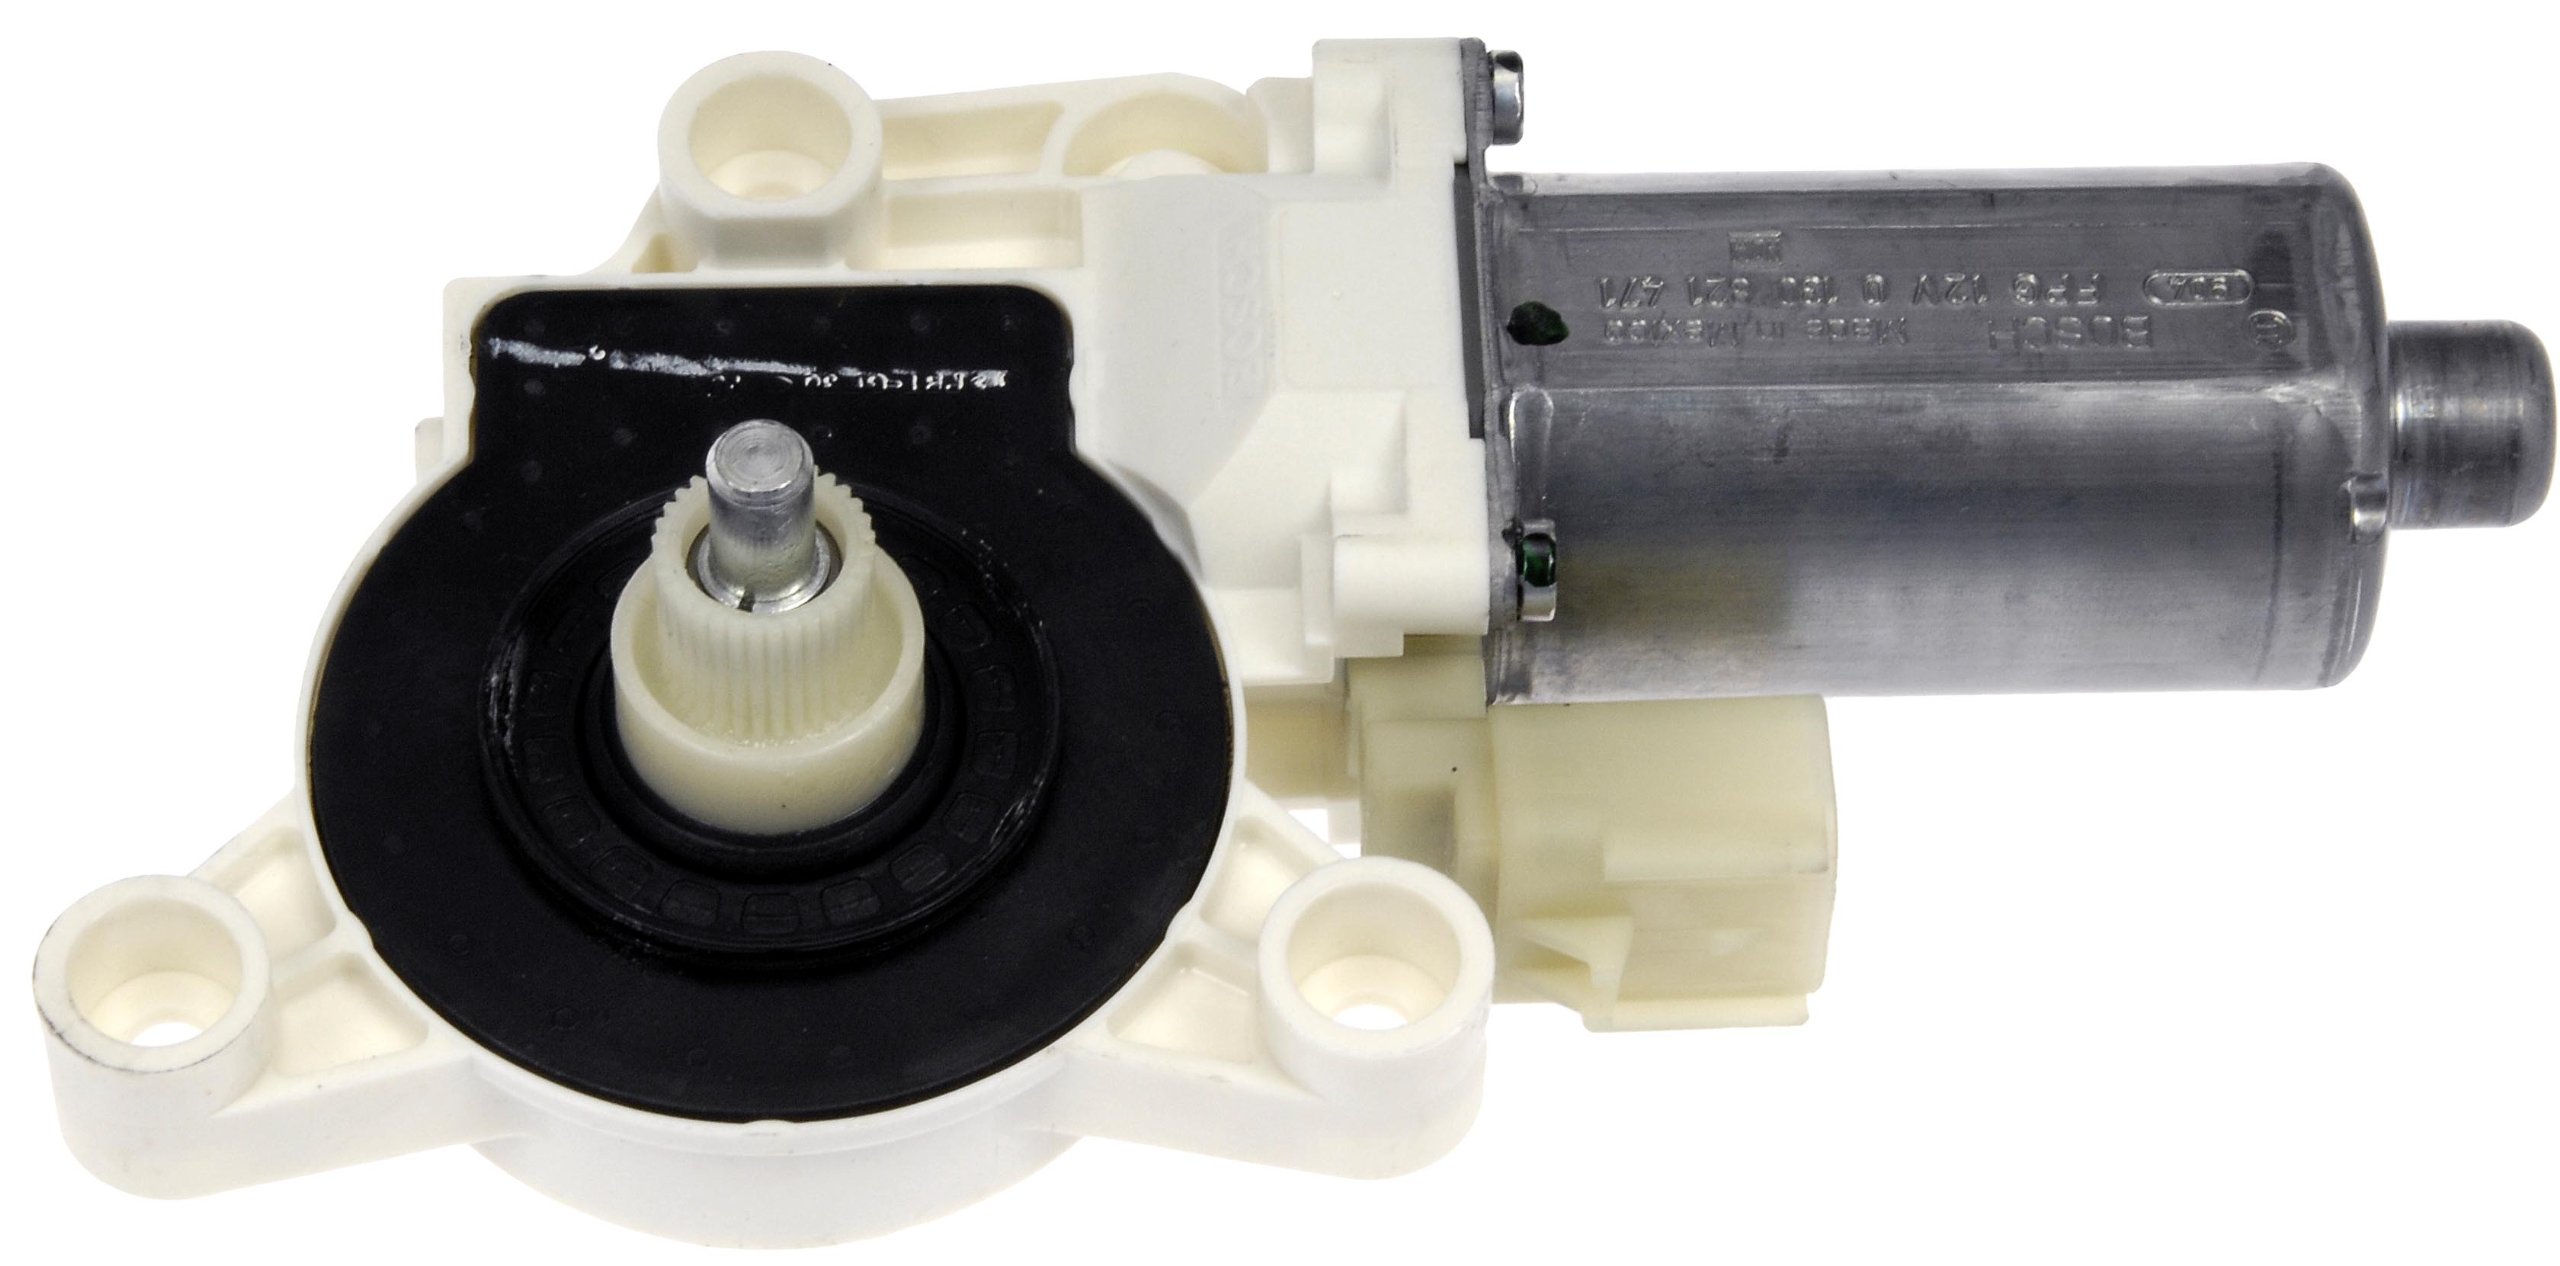 Dorman 742-942 Front Driver Side Power Window Motor compatible with Select chryslerDodgeRam Models